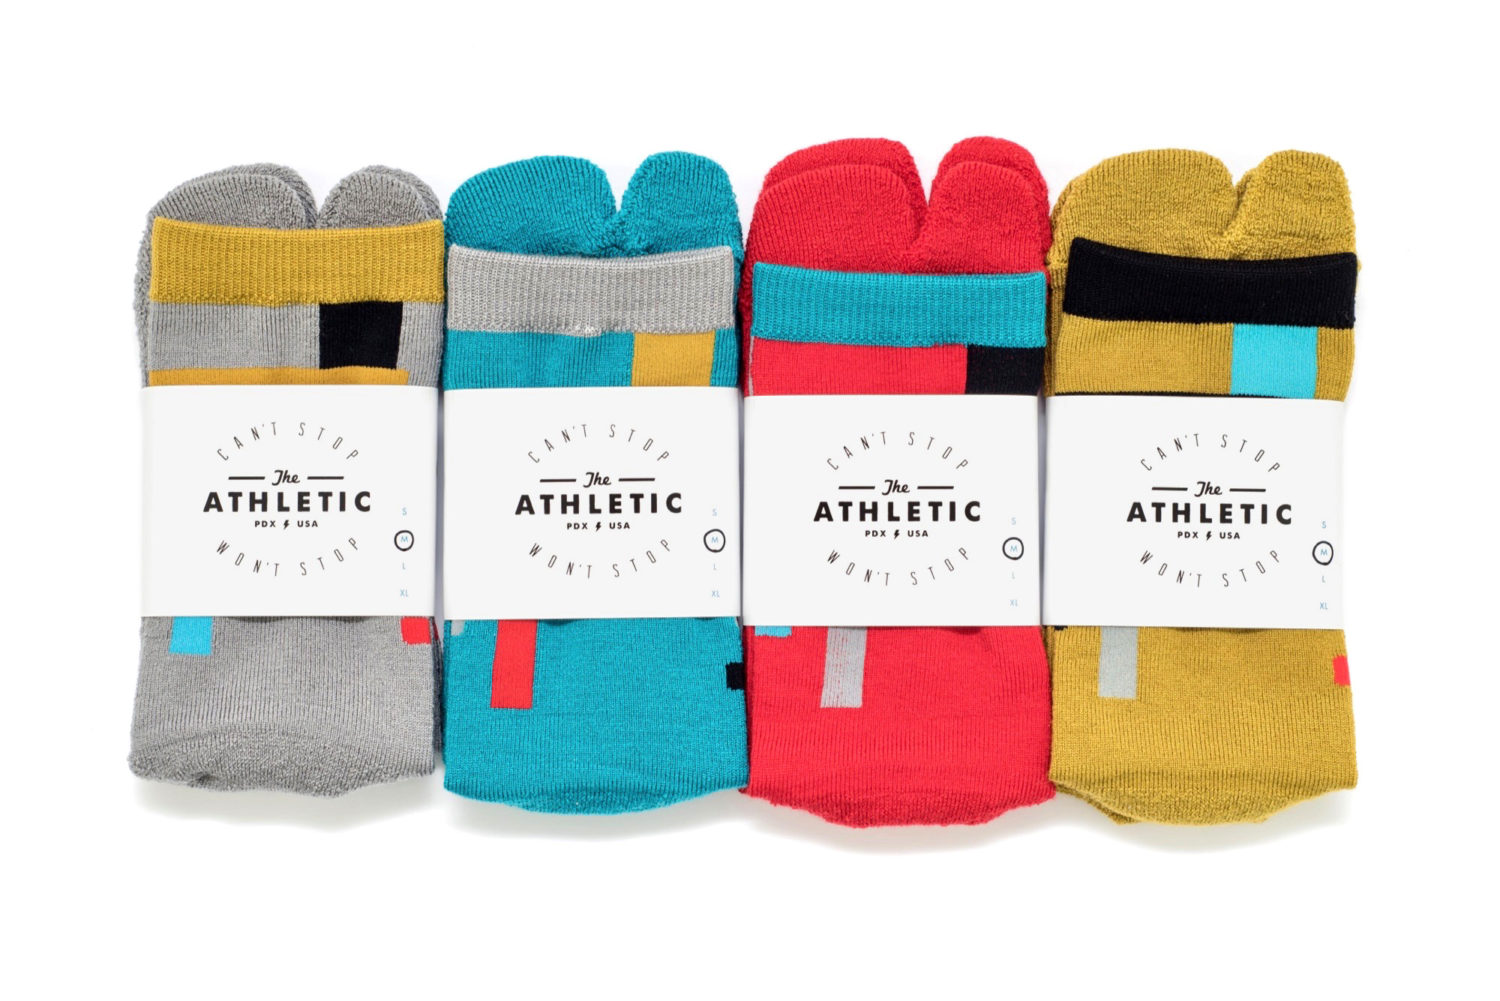 The Athletic Tabby Socks